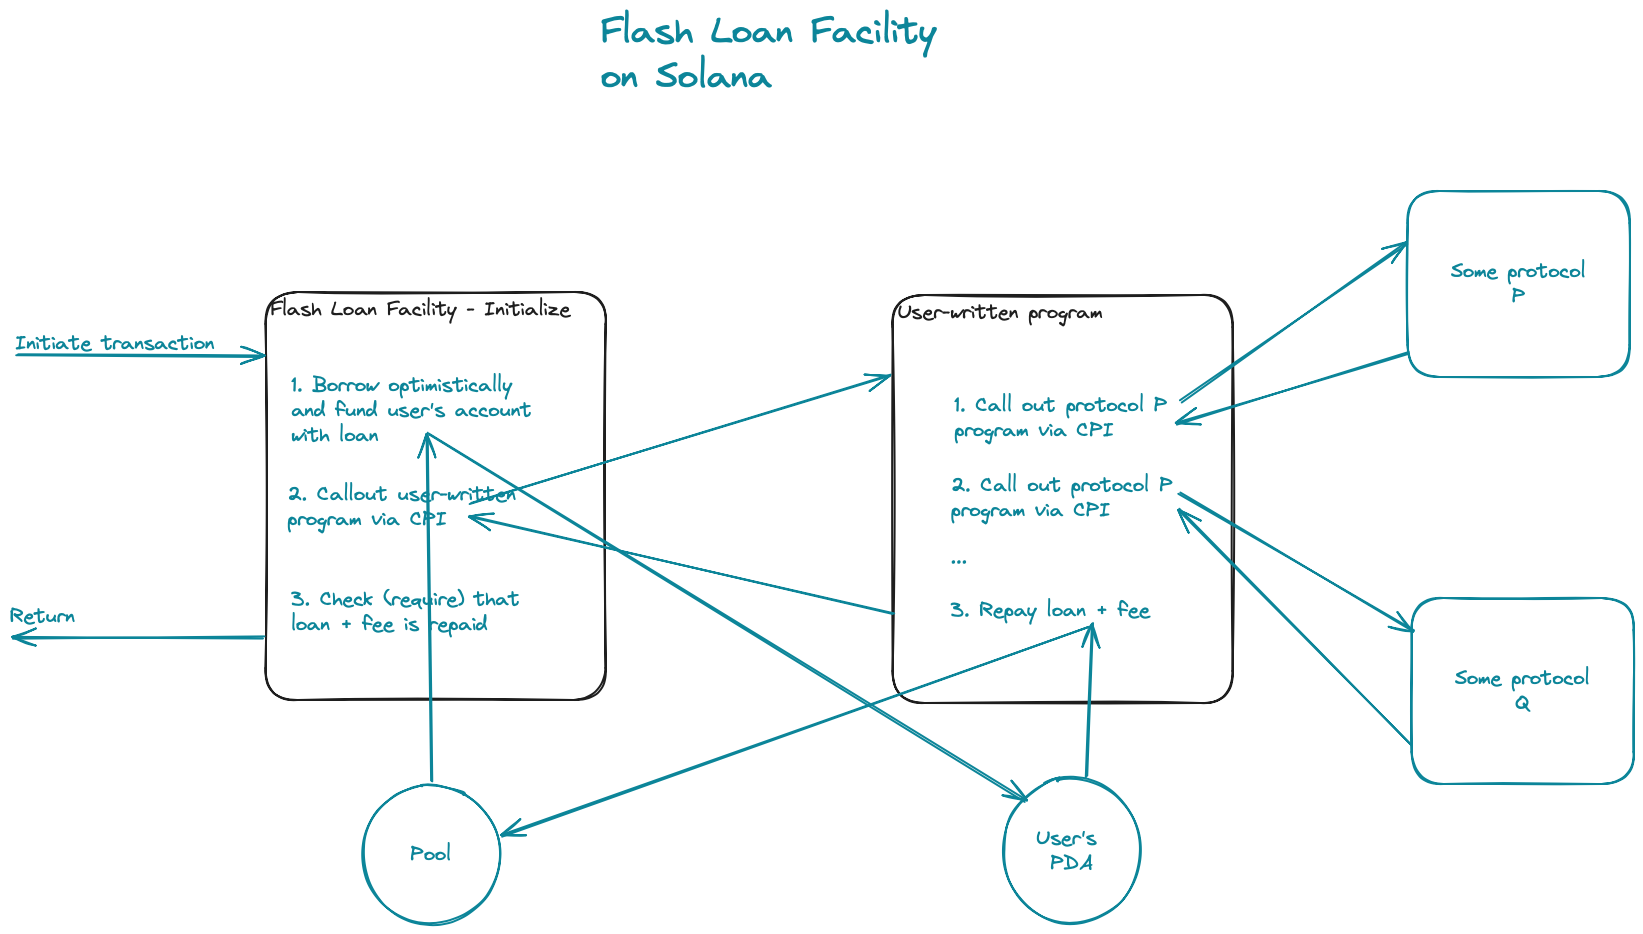 Flash Loan Facility